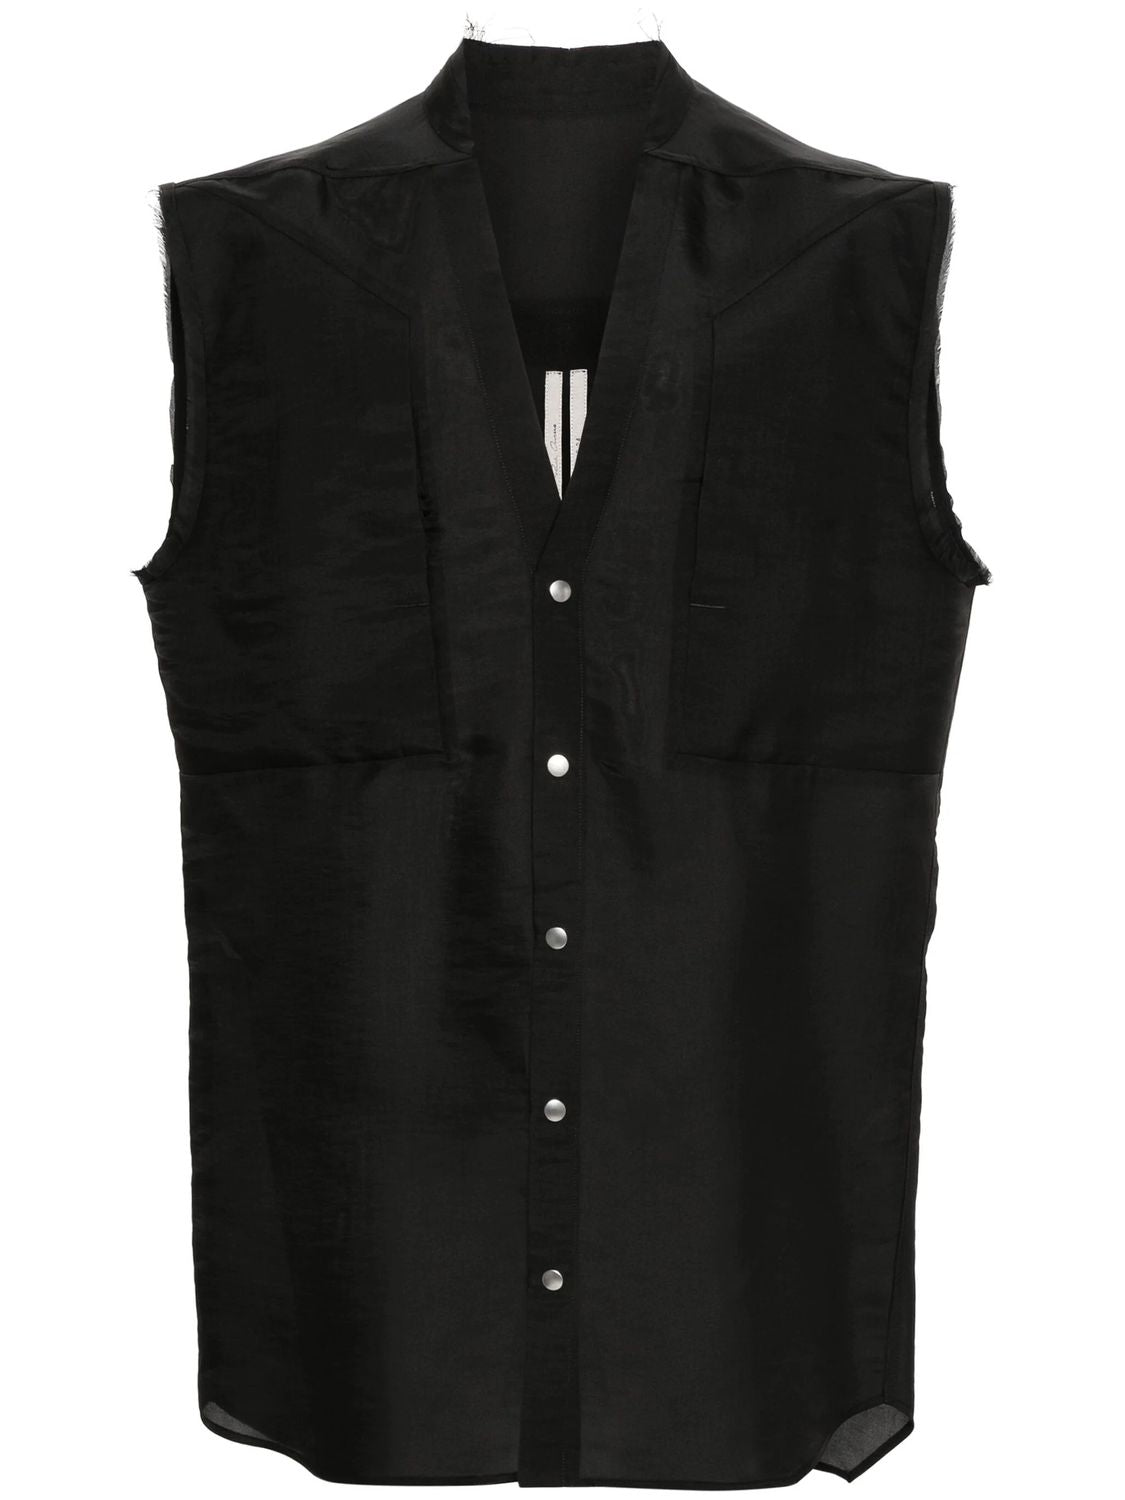 RICK OWENS Men's Black Raw Silk V-neck Vest with Strap Detailing and Press-Stud Fastening